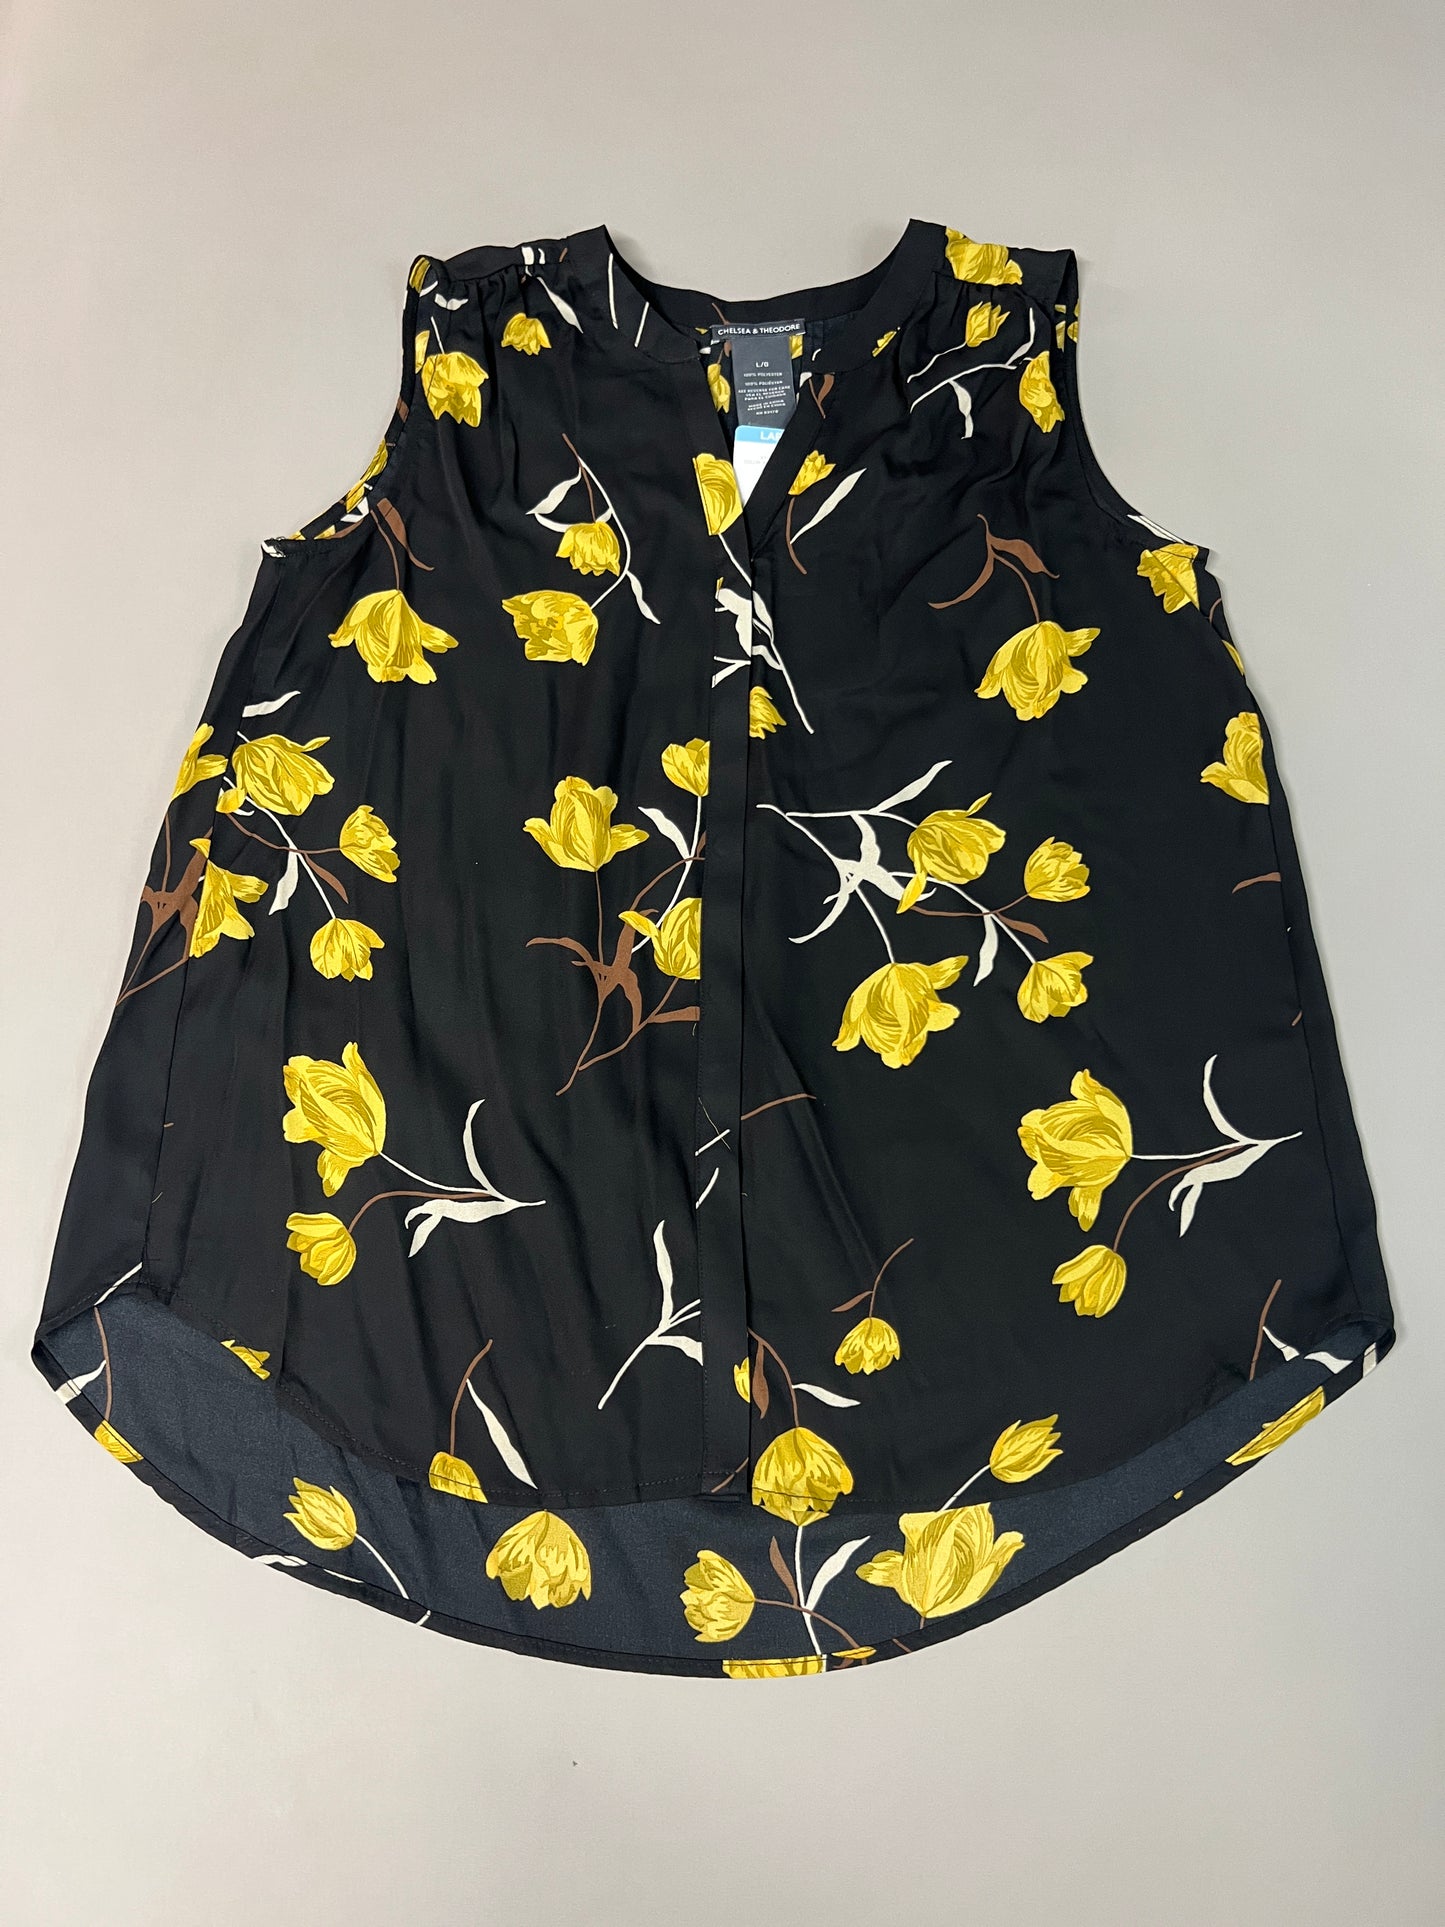 CHELSEA & THEODORE Sleeveless Blouse Women's Size L Black/Yellow Tulip 2165072 (NEW)